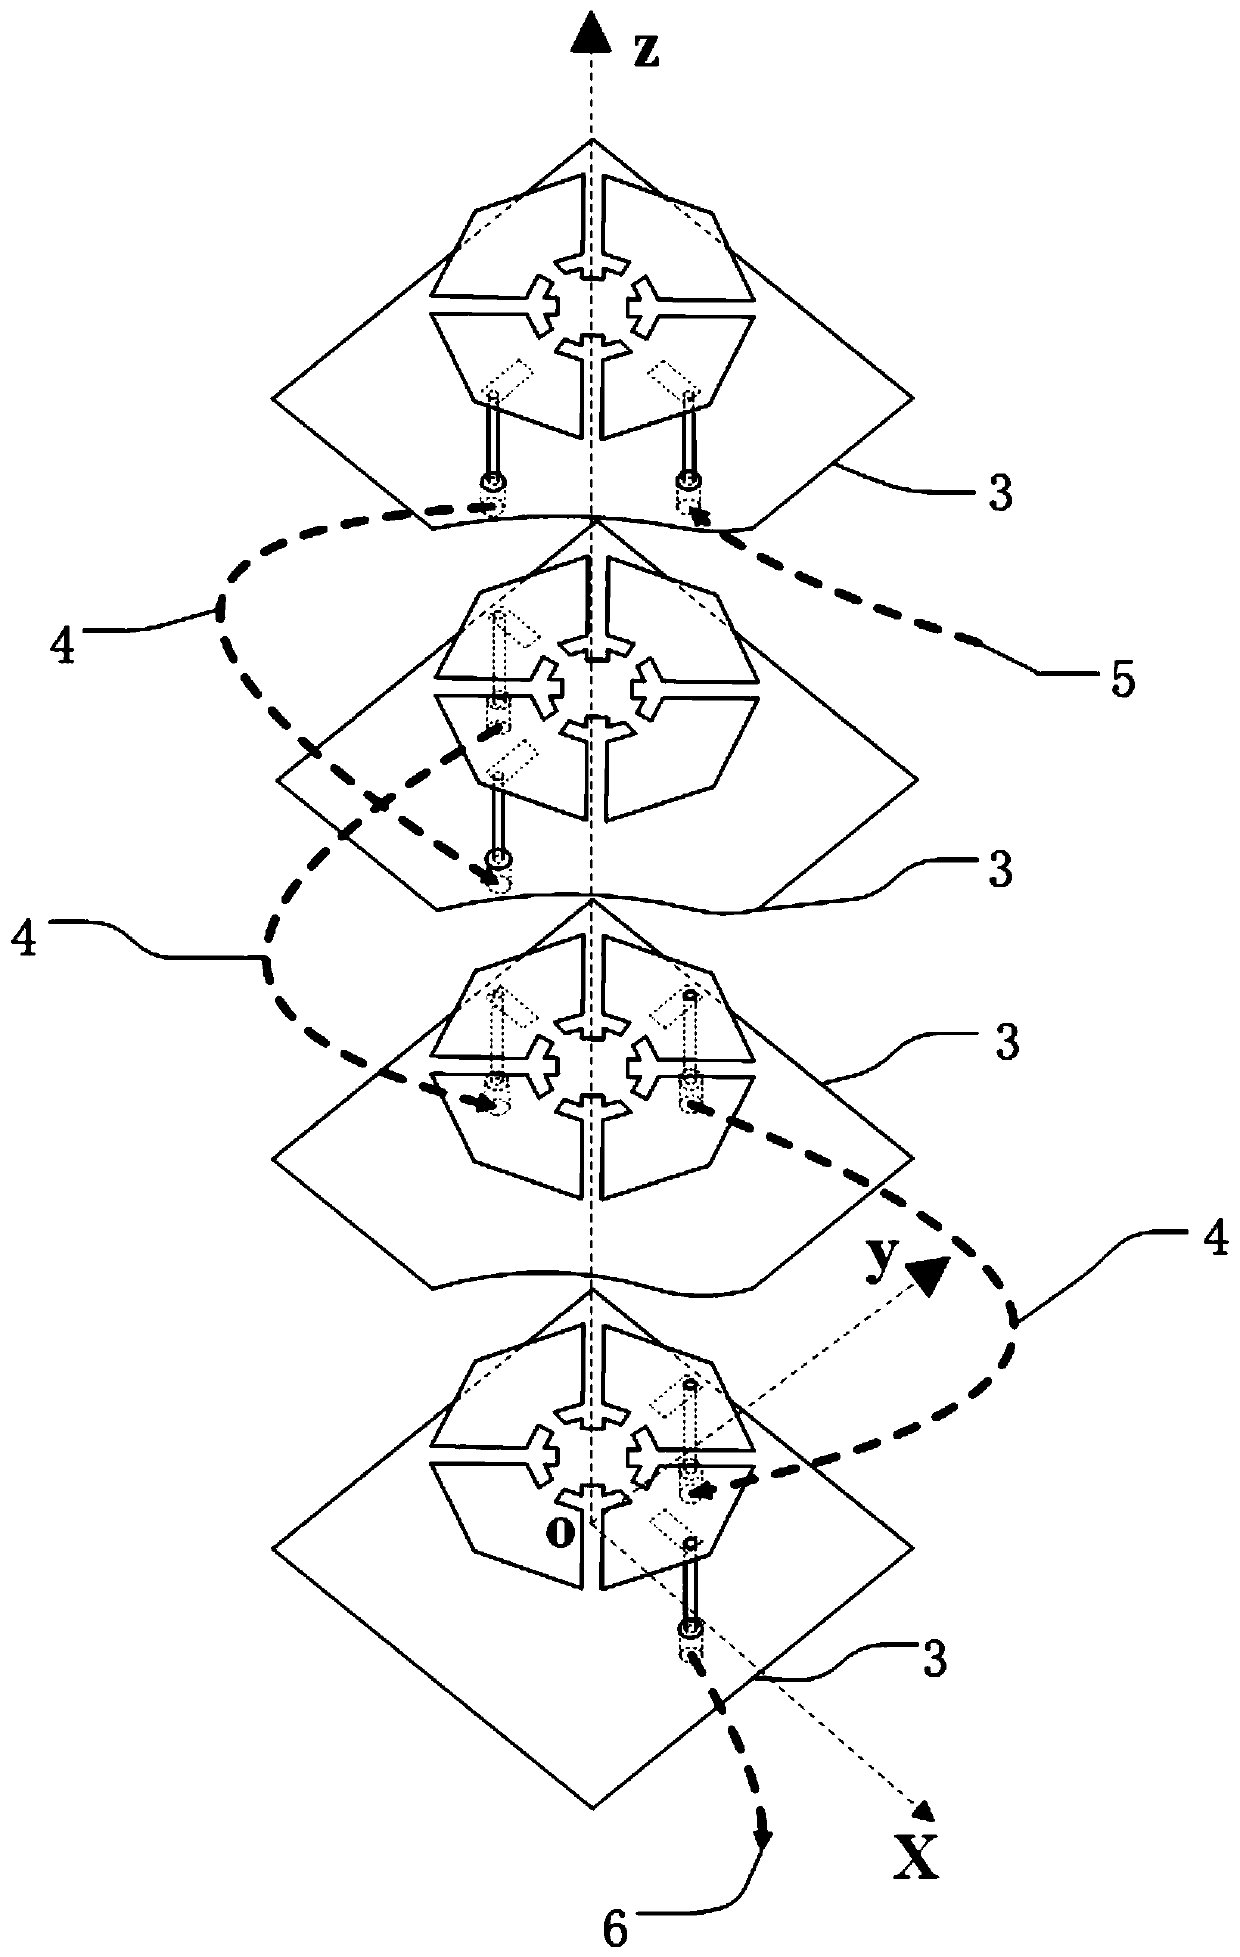 Series-feed circularly-polarized antenna normal array